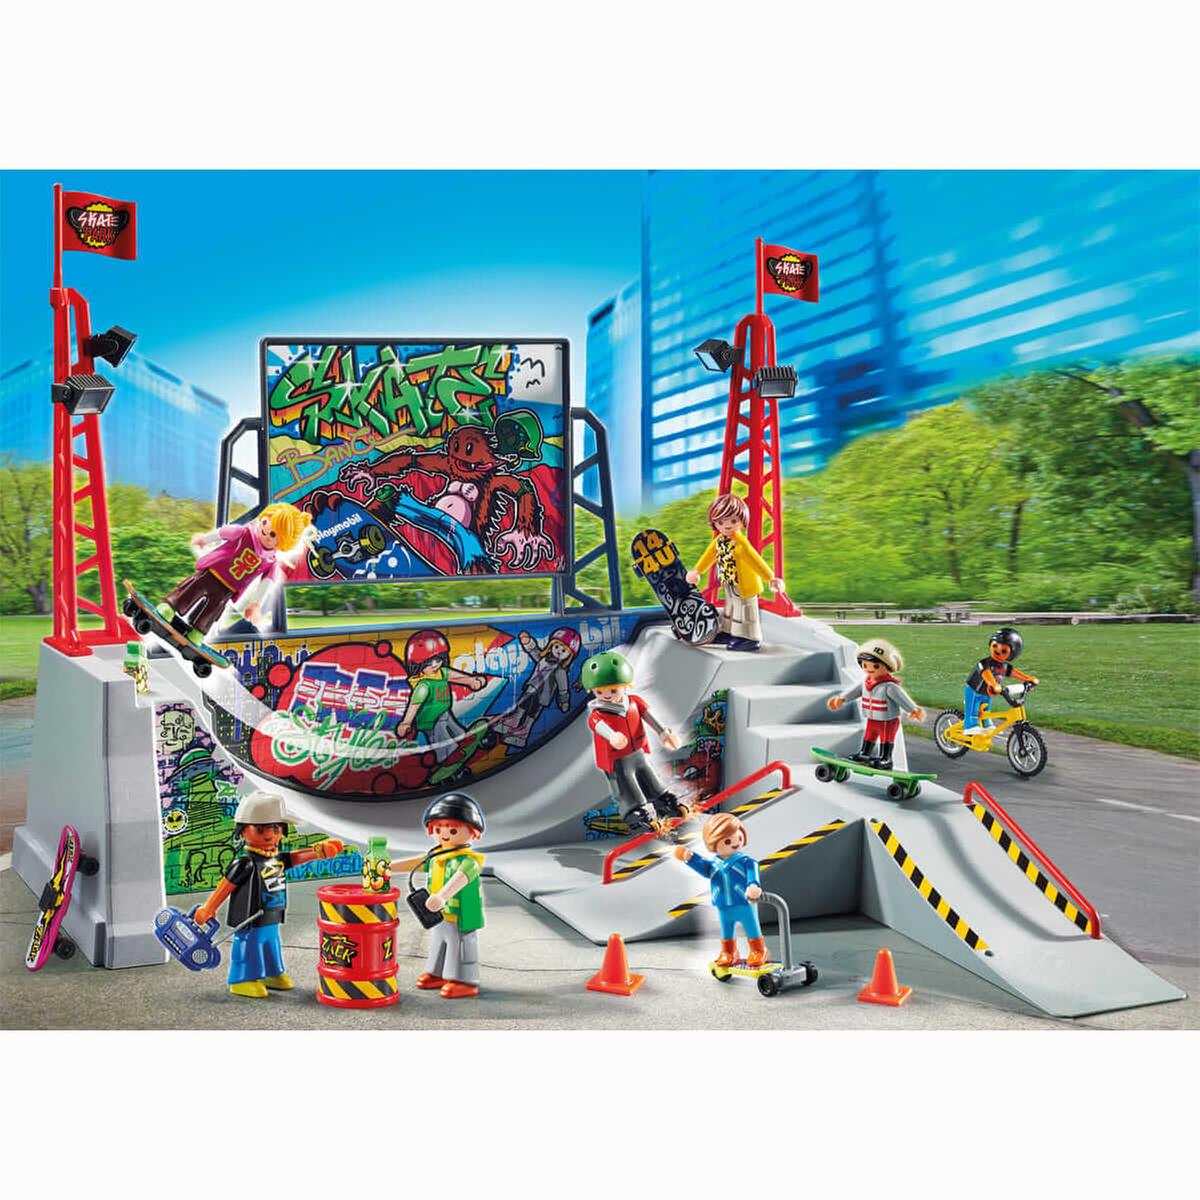 Playmobil - Skate Park 70168 | City Action Puerto | Toys"R"Us España